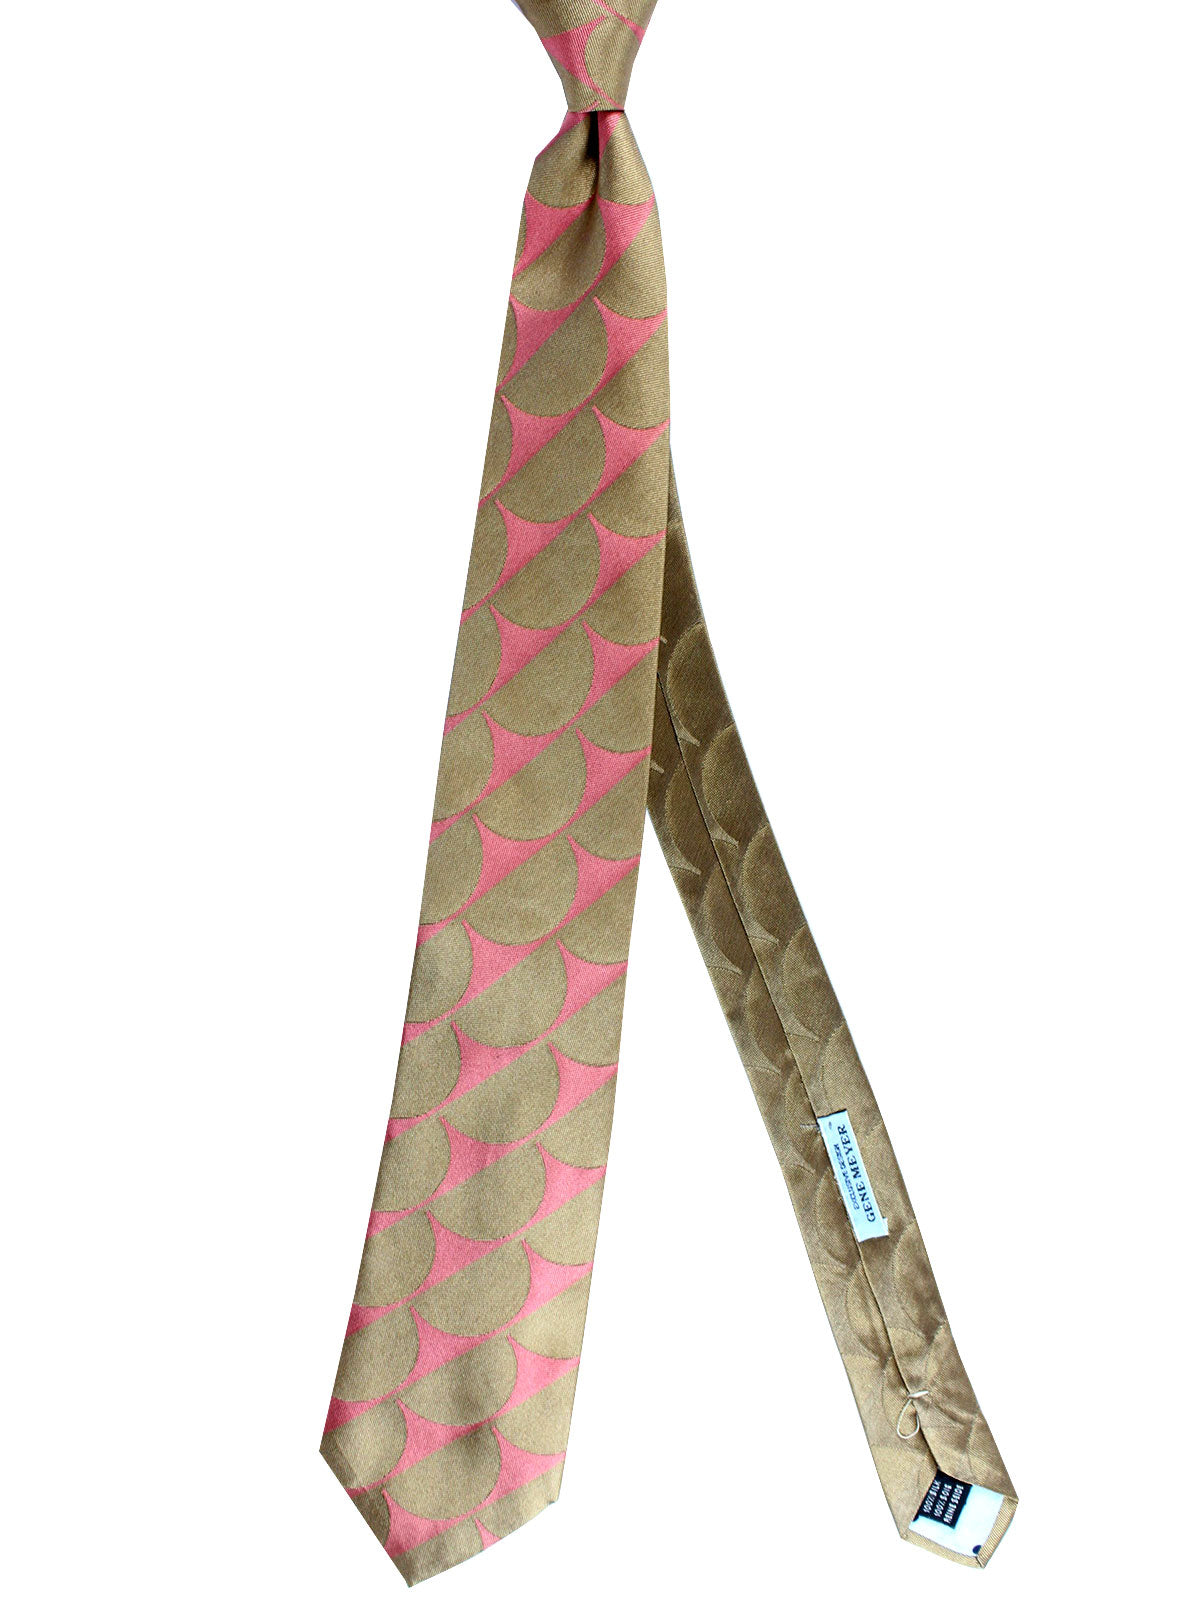 Gene Meyer Silk Tie Taupe Pink Geometric